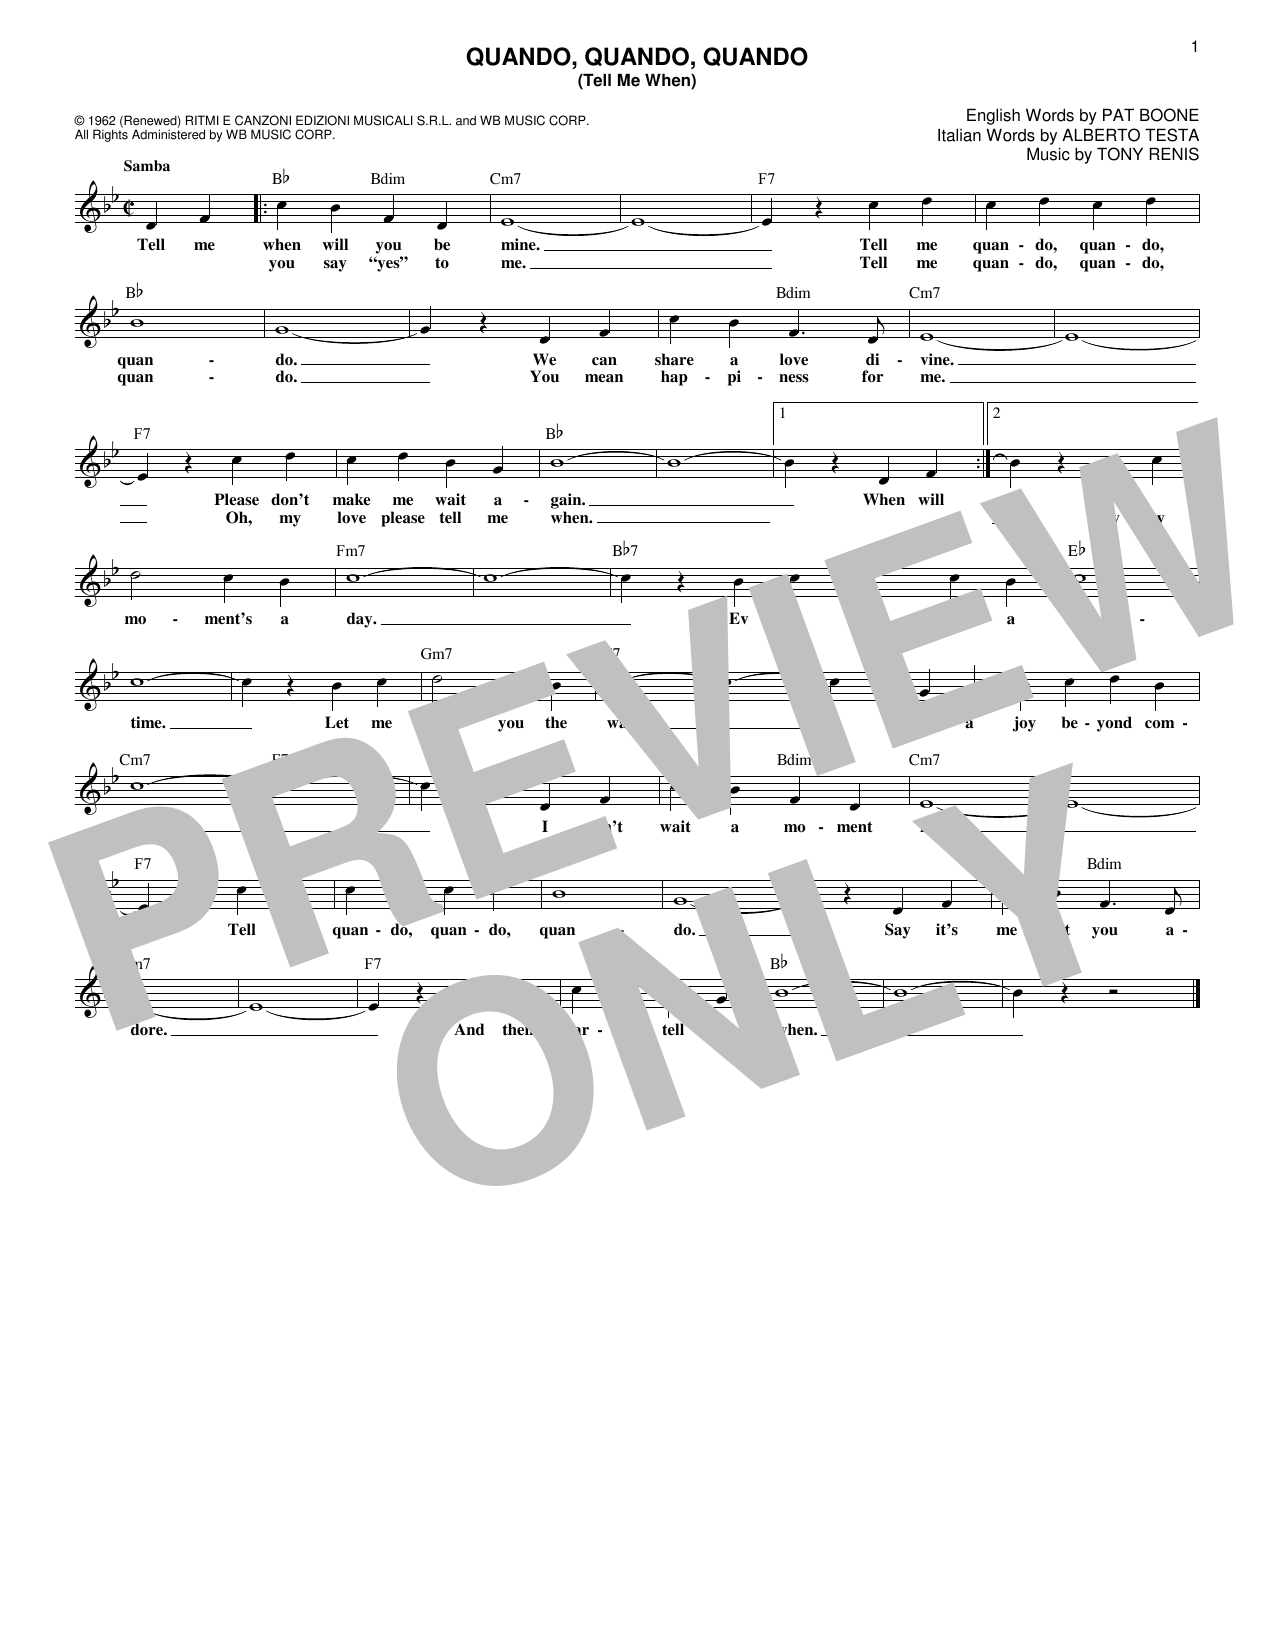 Alberto Testa Quando, Quando, Quando (Tell Me When) Sheet Music Notes & Chords for Melody Line, Lyrics & Chords - Download or Print PDF